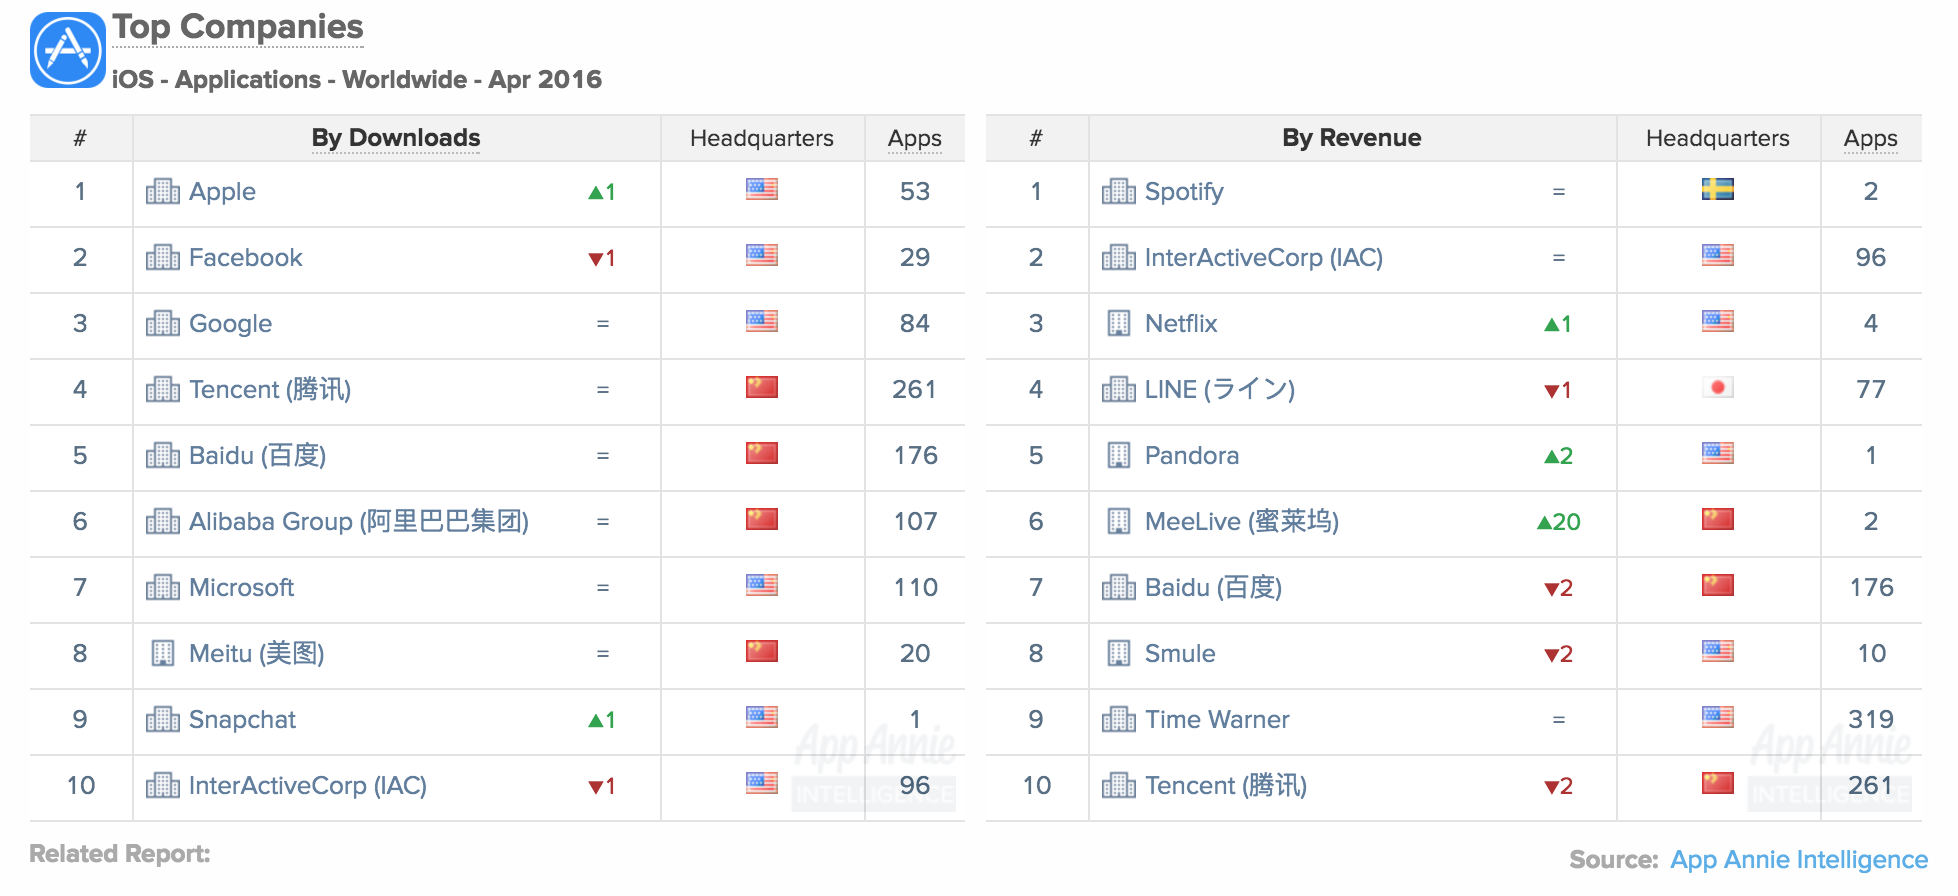 Top Companies iOS Applications Worldwide April 2016 Downloads Revenue